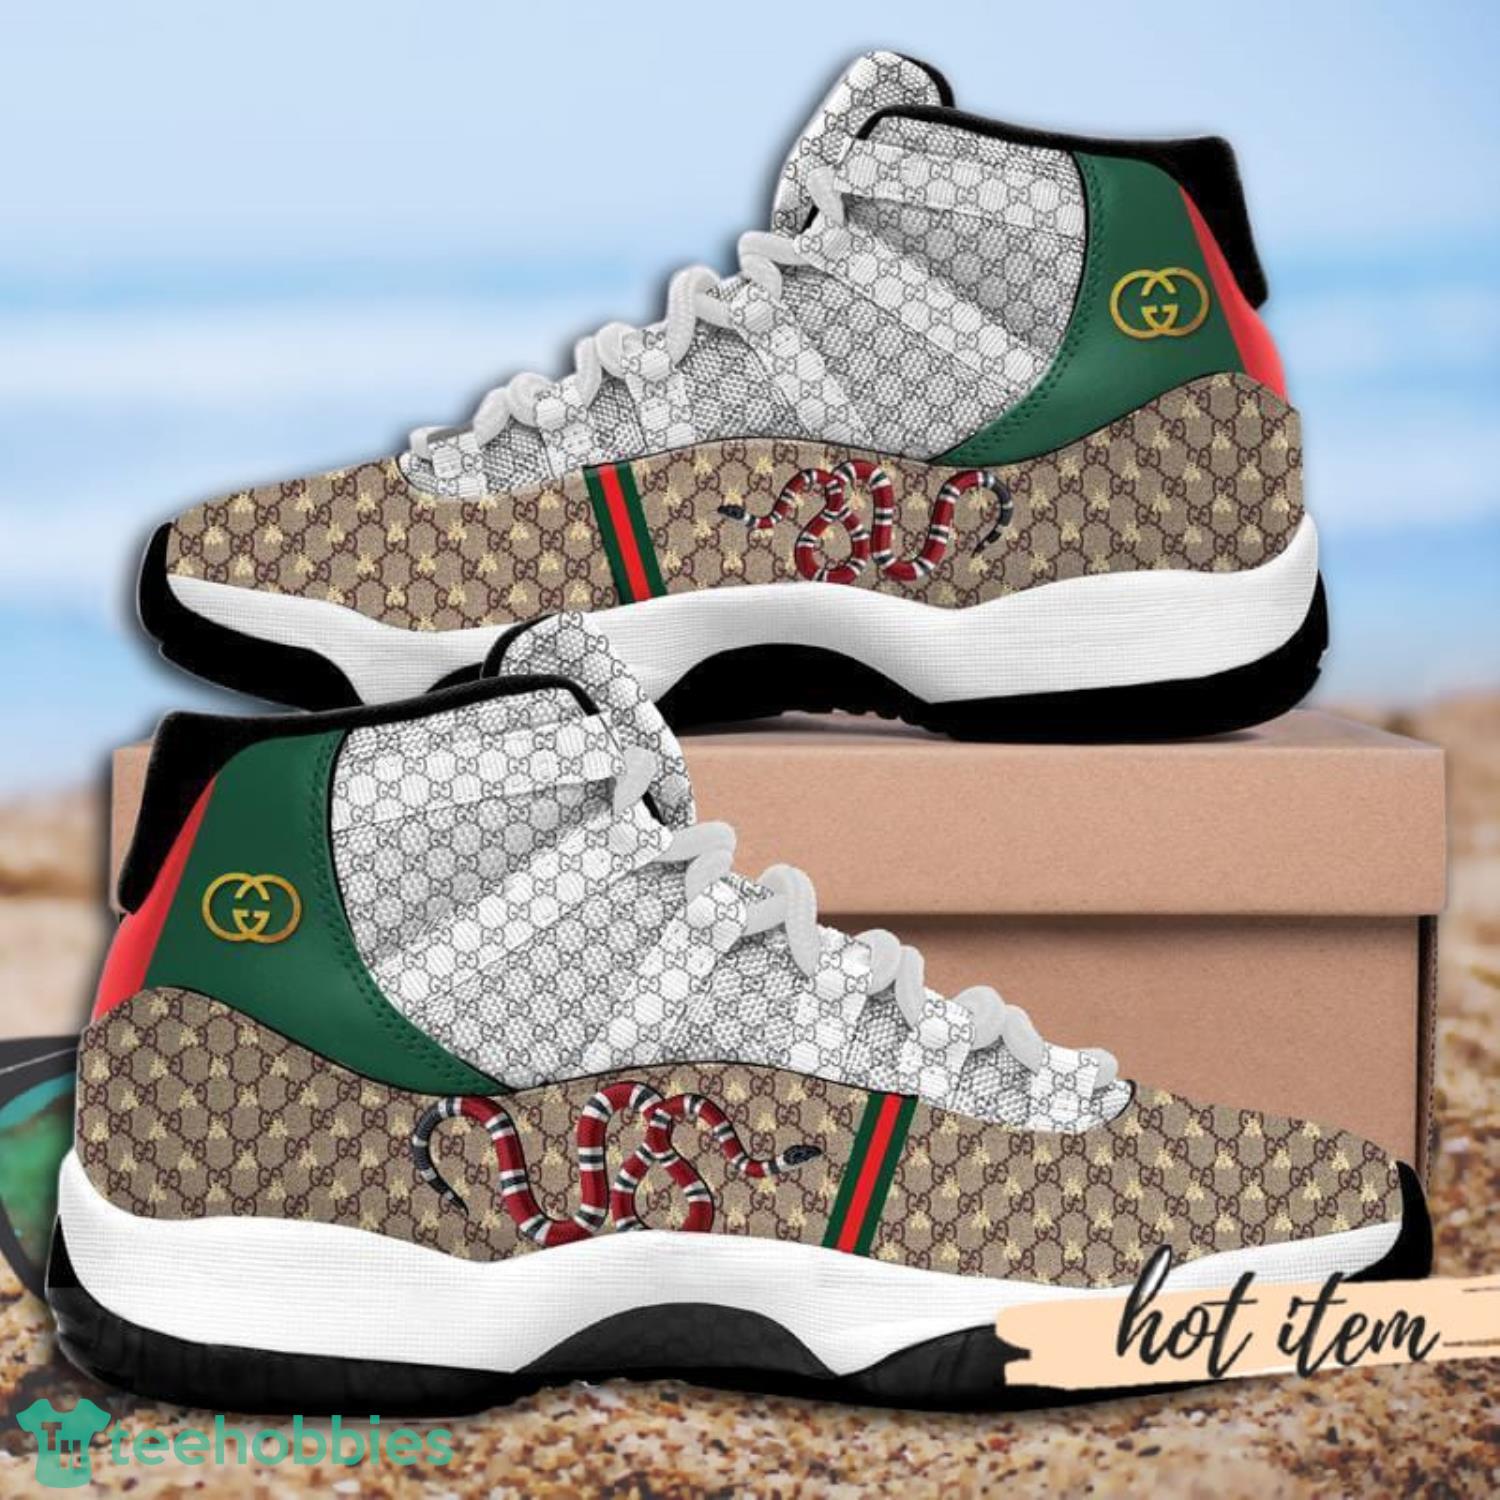 HOT] Gucci Red Snake Air Jordan 11 Sneakers Shoes Hot